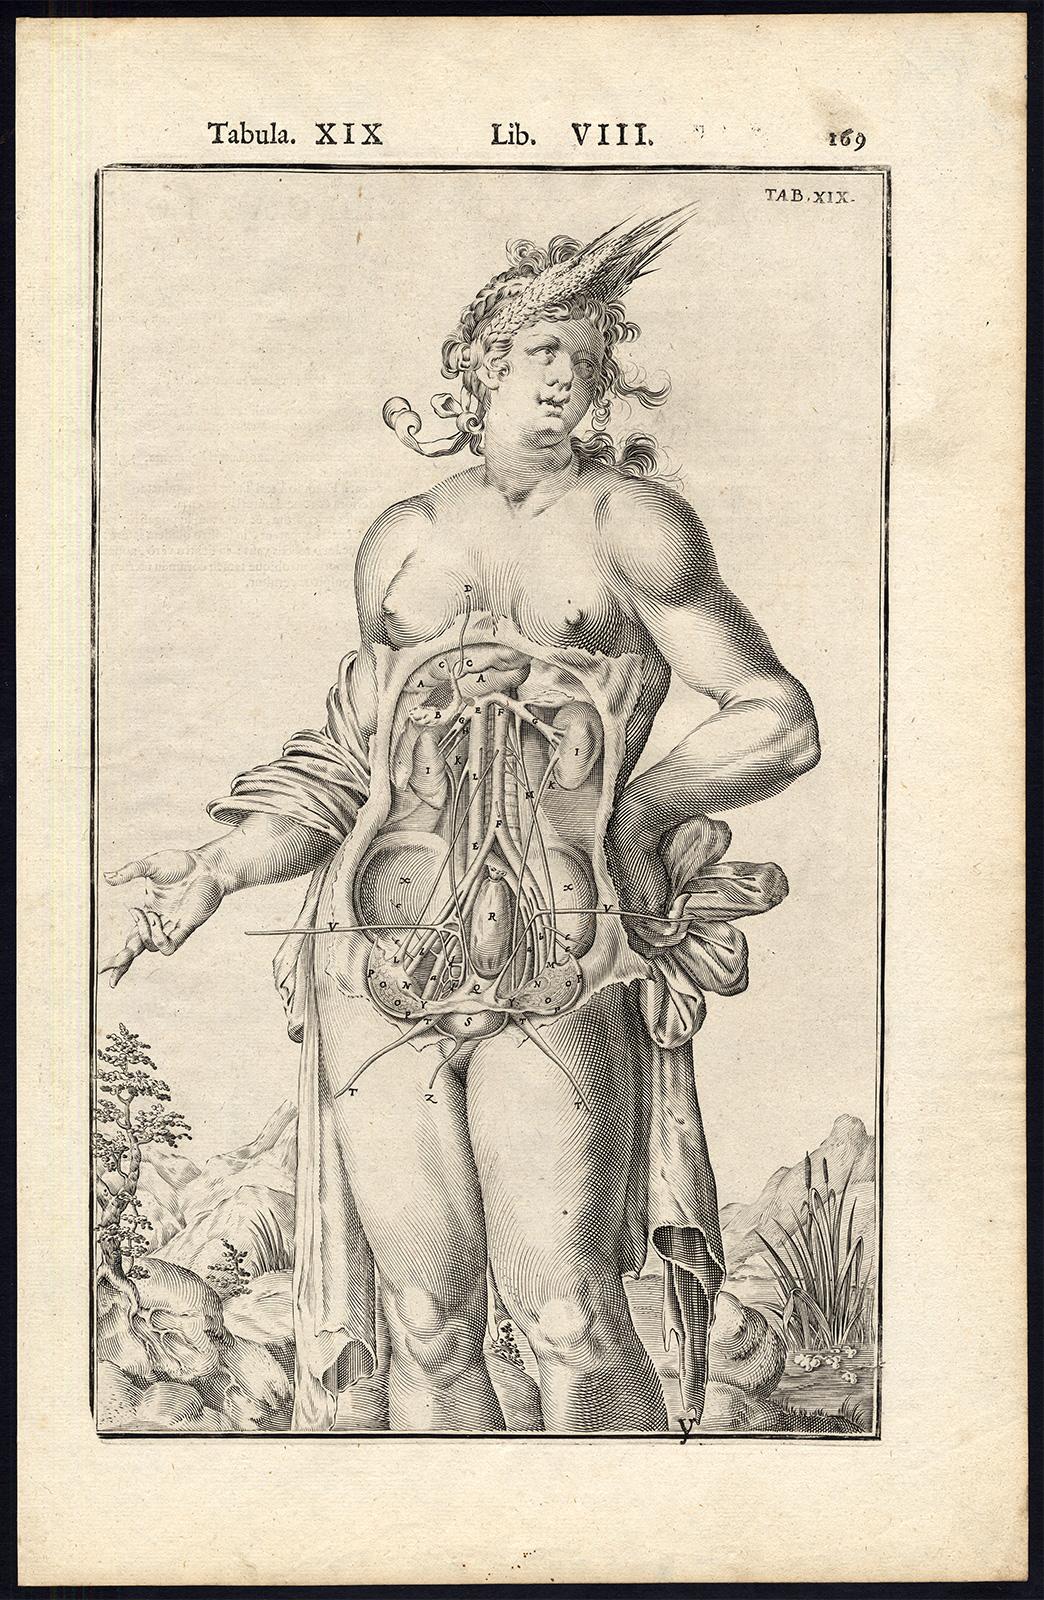 2 anatomical prints - Woman's abdomen by Spigelius - Engraving - 17th century - Beige Print by Adrianus Spigelius